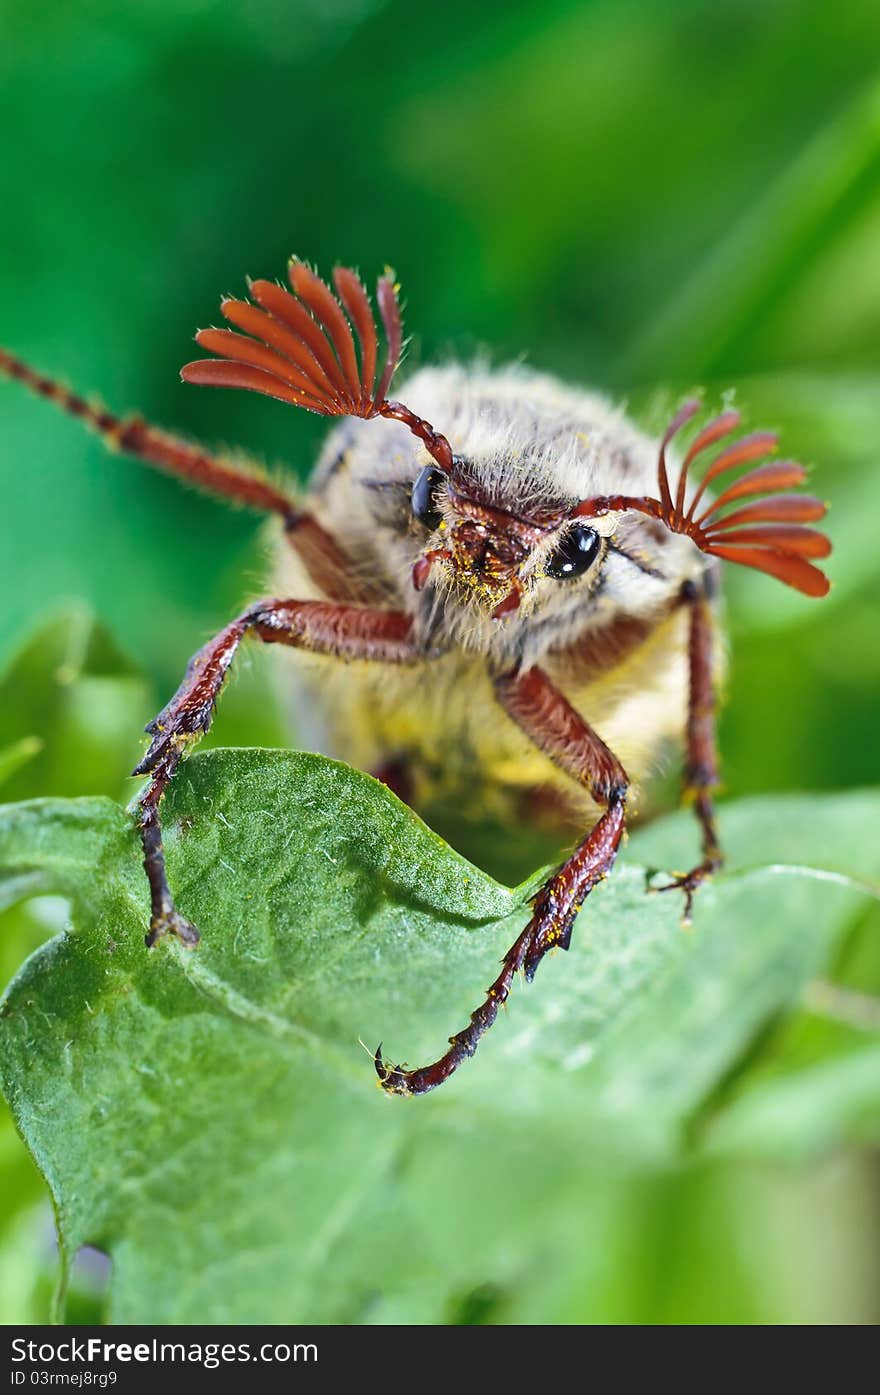 Maybug sitting on green leaf and looks into camera